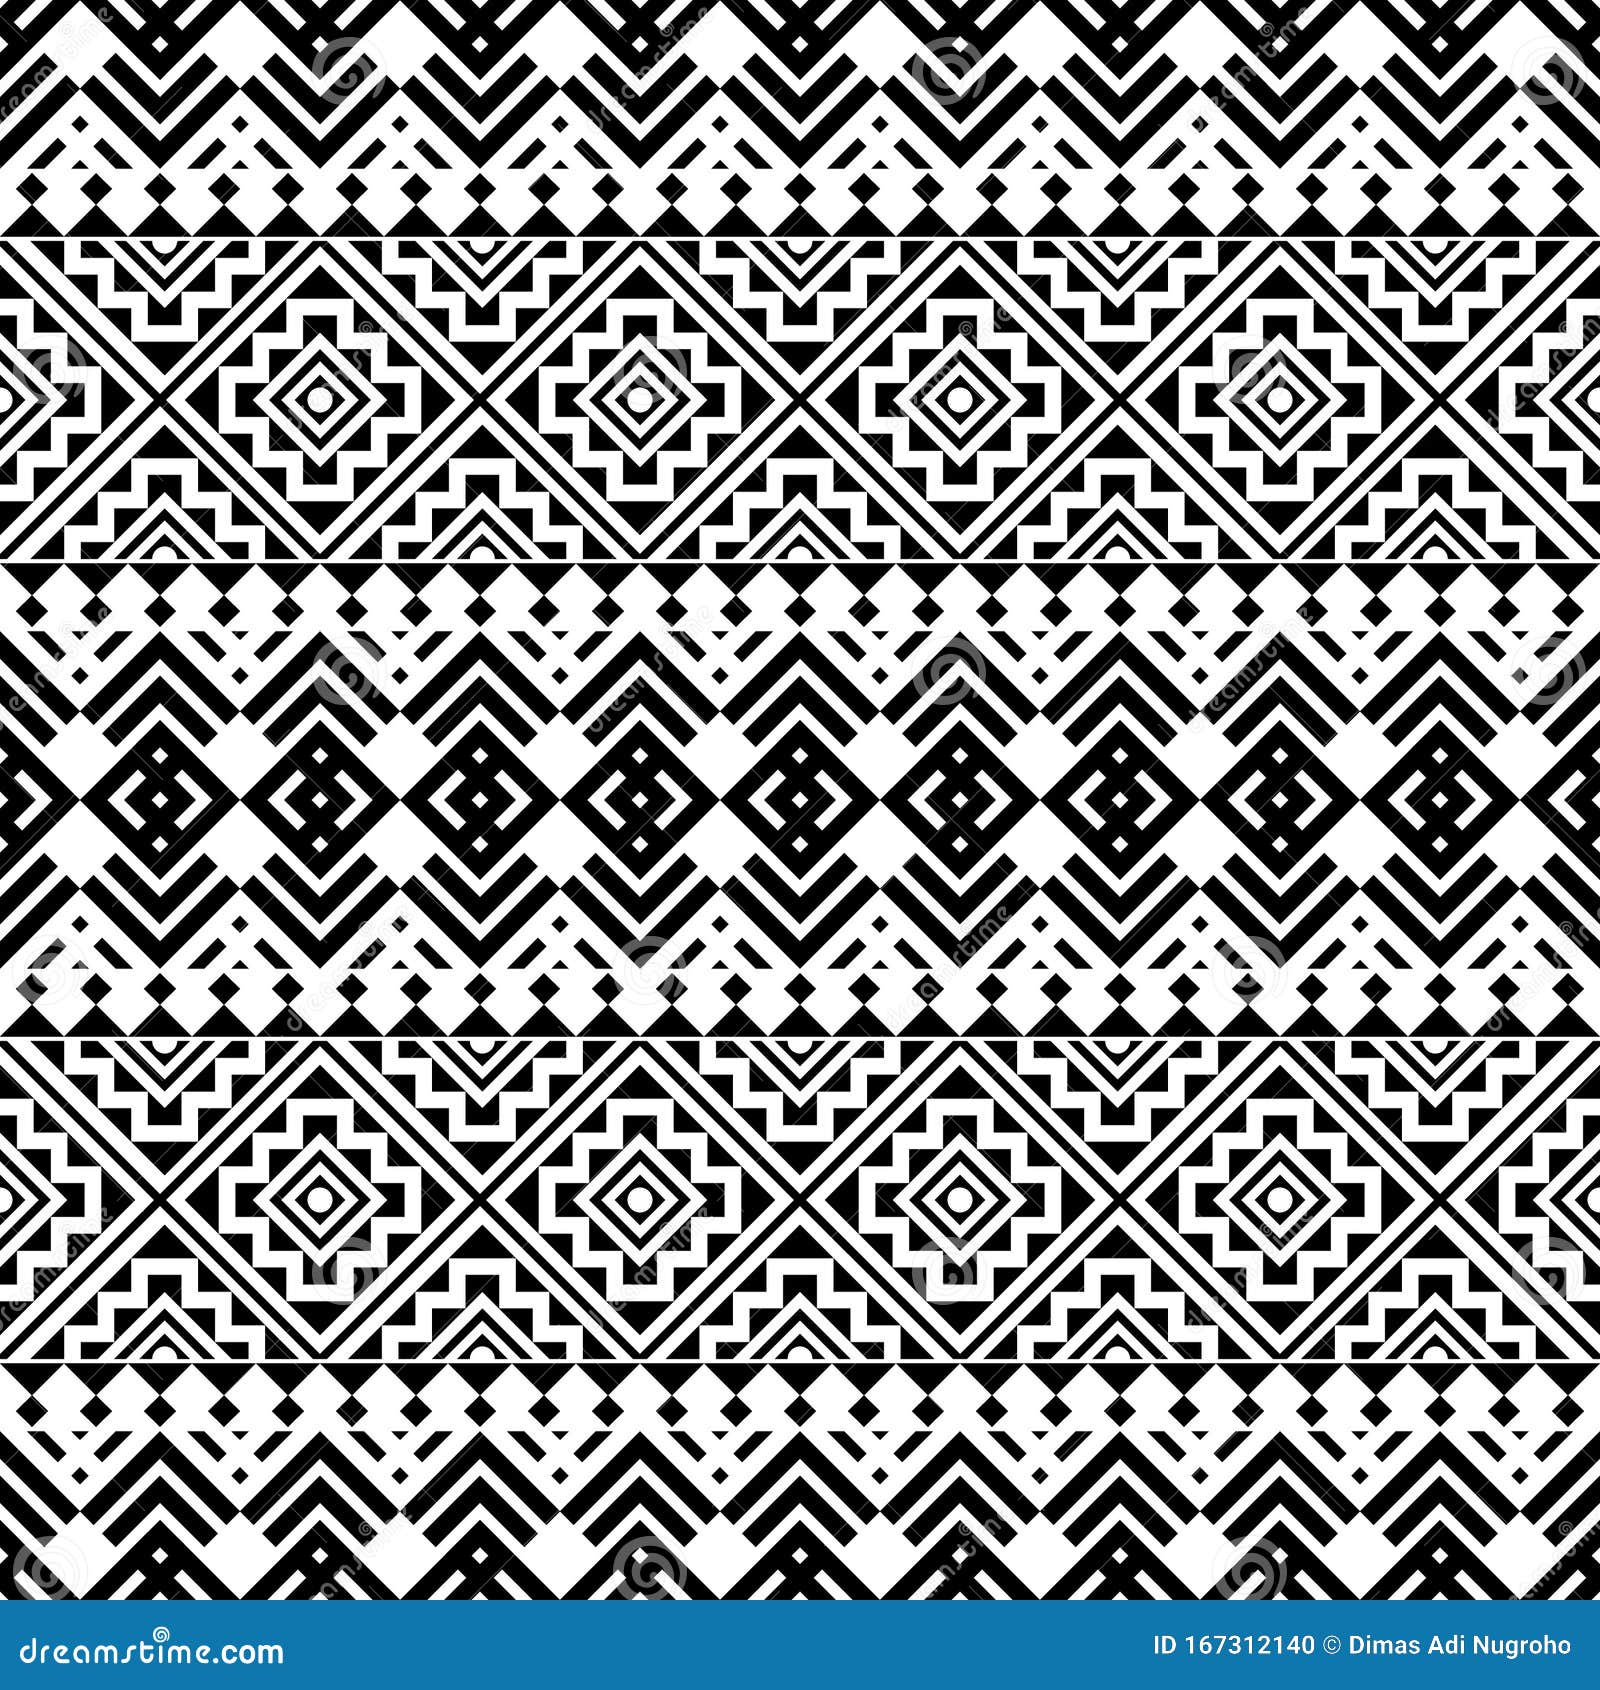 Tribal Ethnic Seamless Ethnic Pattern Vector Black White Color Stock ...